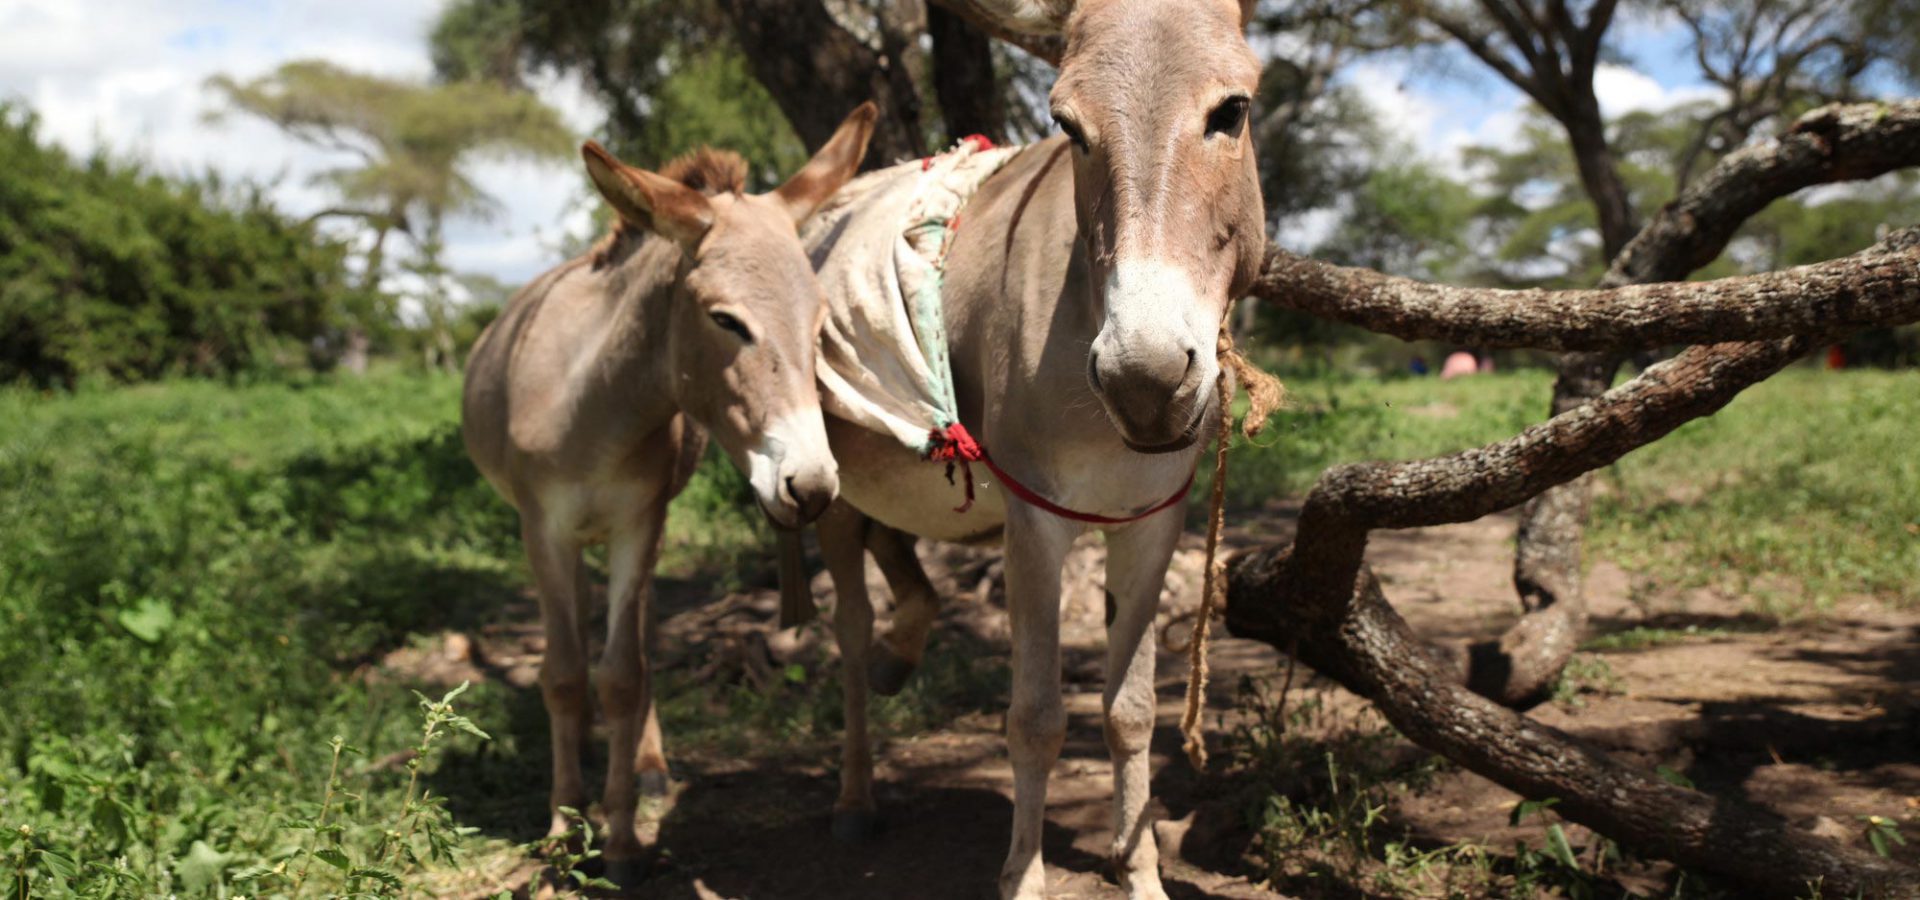 Donkeys in Tanzania forest